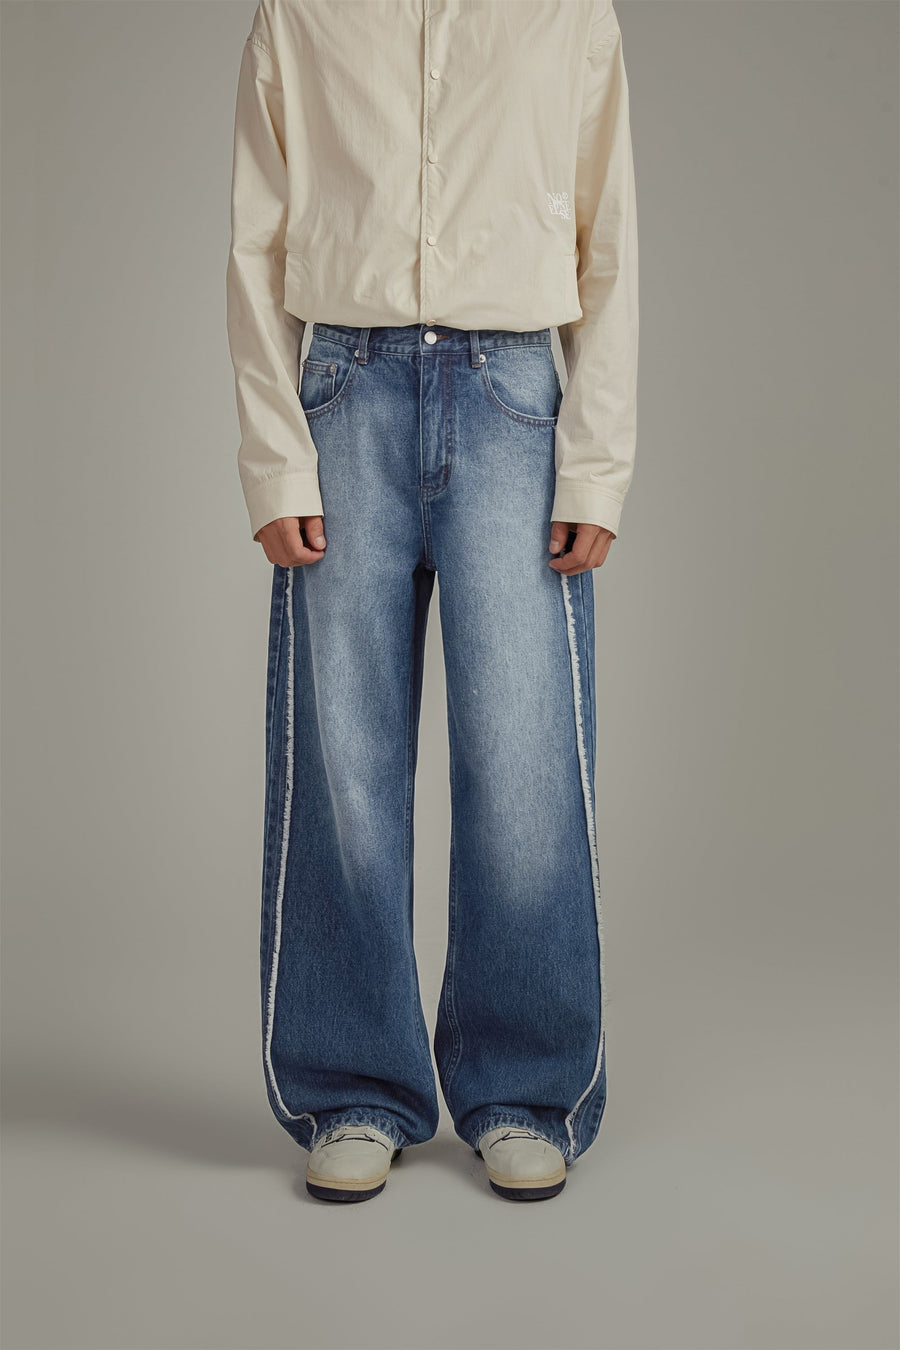 CHUU Fringed Lined Wide Denim Jeans